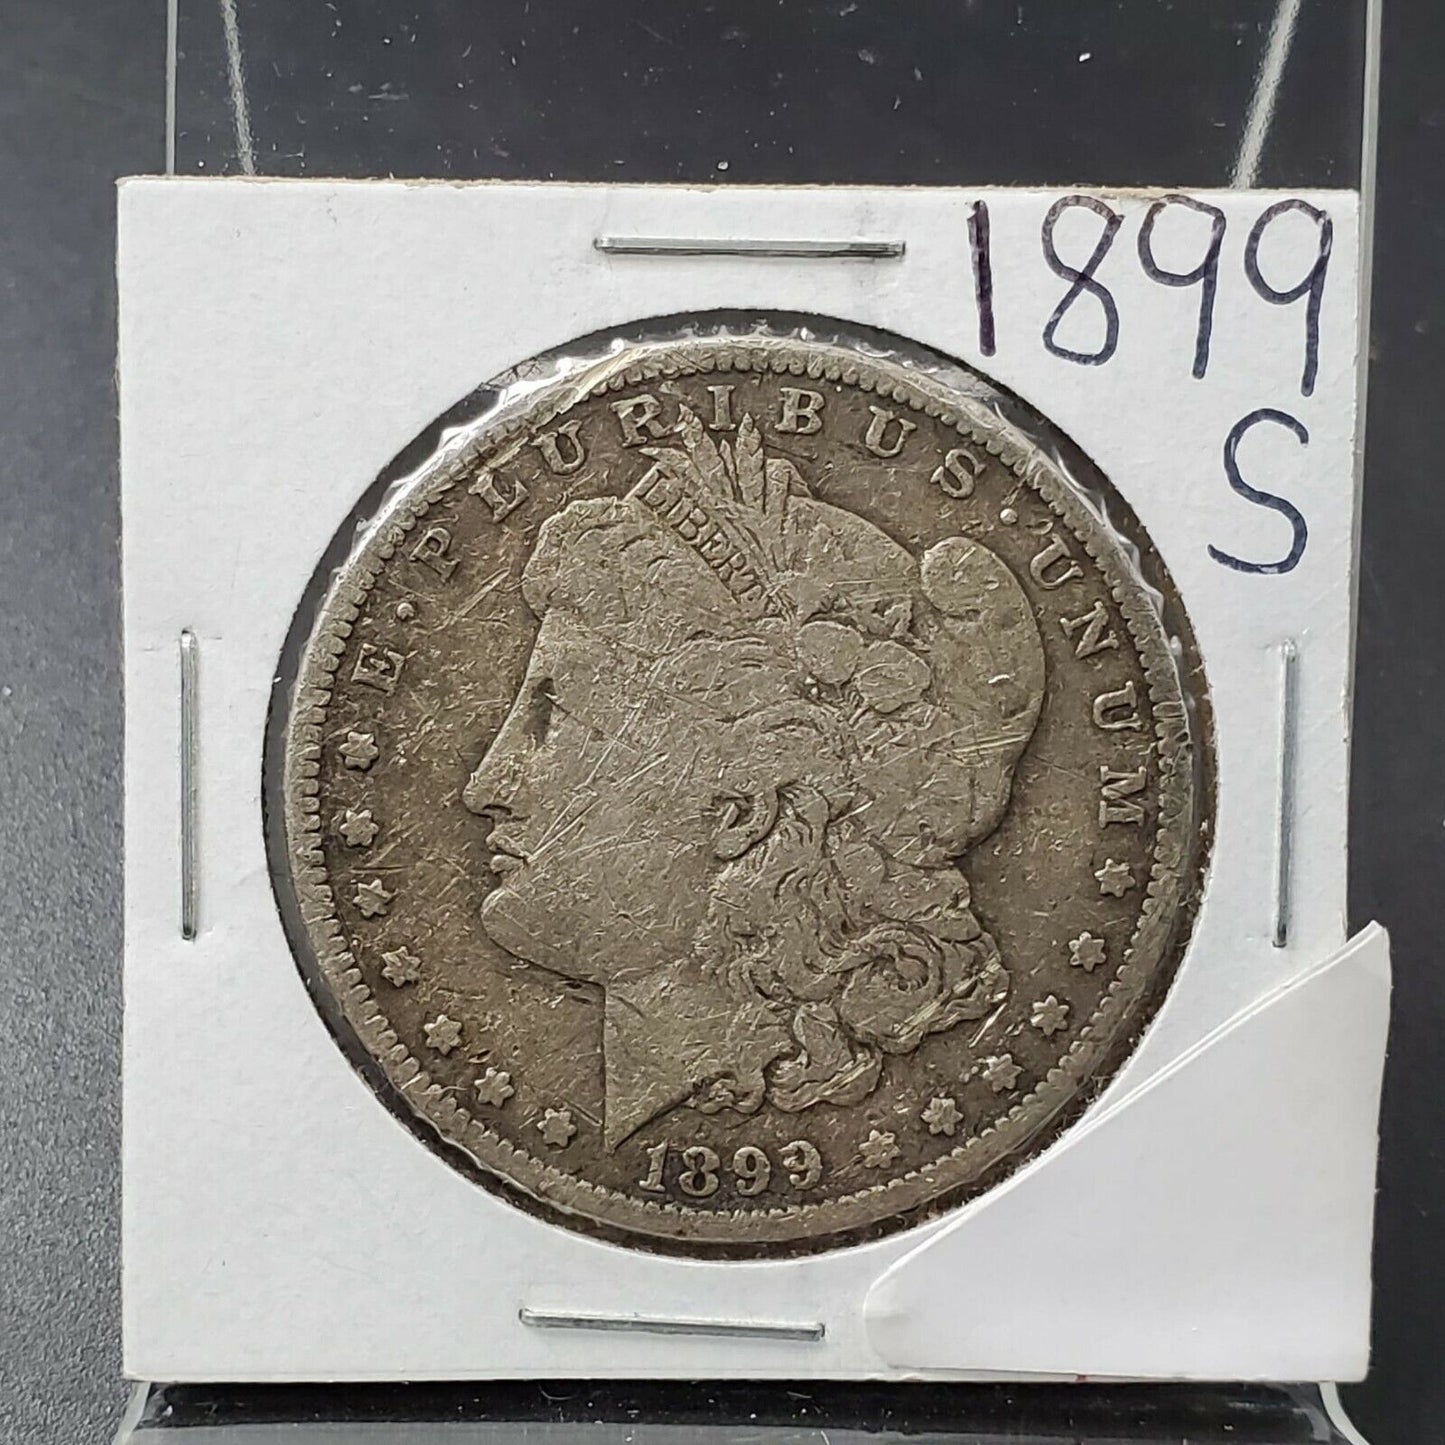 1899 S $1 Morgan Silver Eagle Dollar Coin Choice VG Very Good / Fine detail